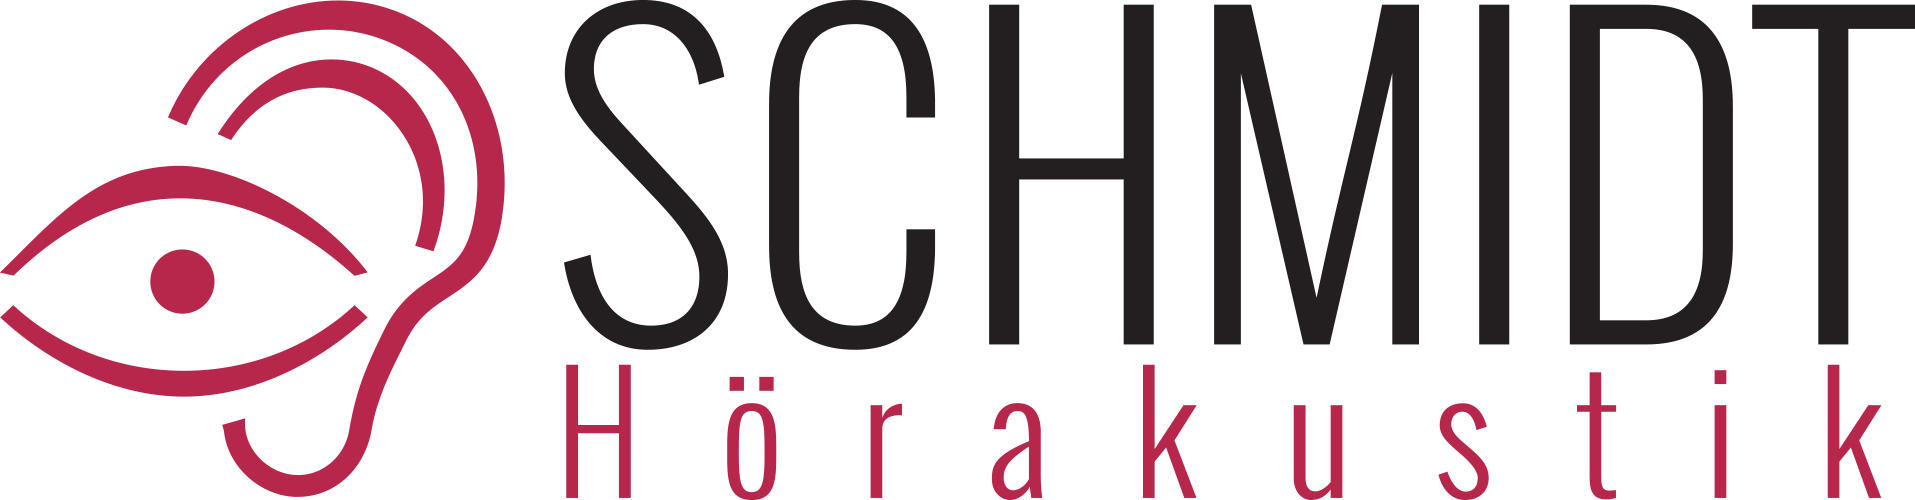 Schmidt Hörakustik Logo